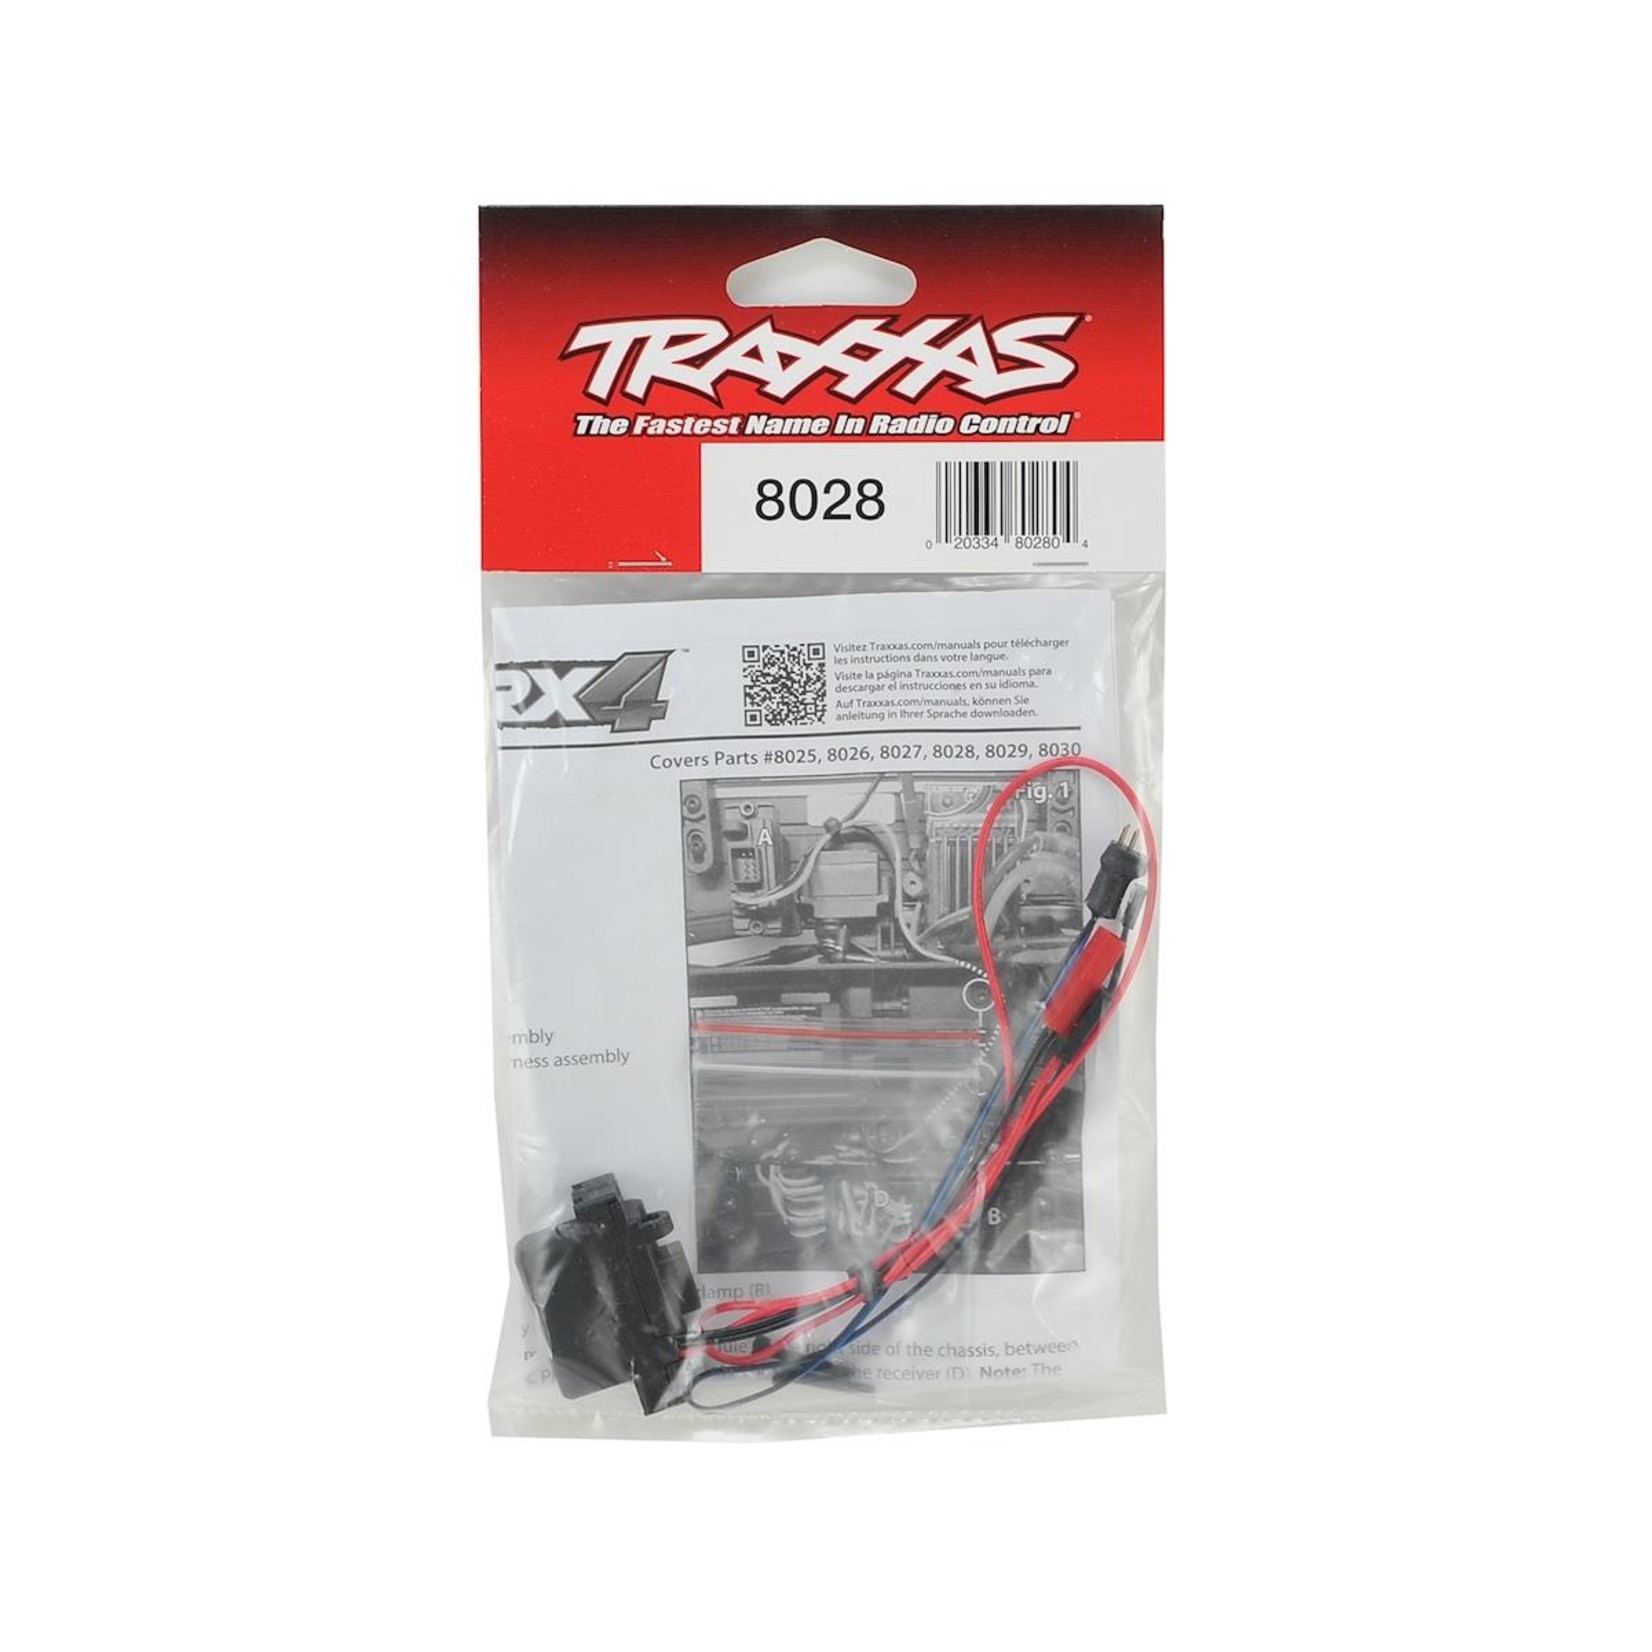 Traxxas Traxxas TRX-4 LED Power Supply w/3-In-1 Wire Harness #8028